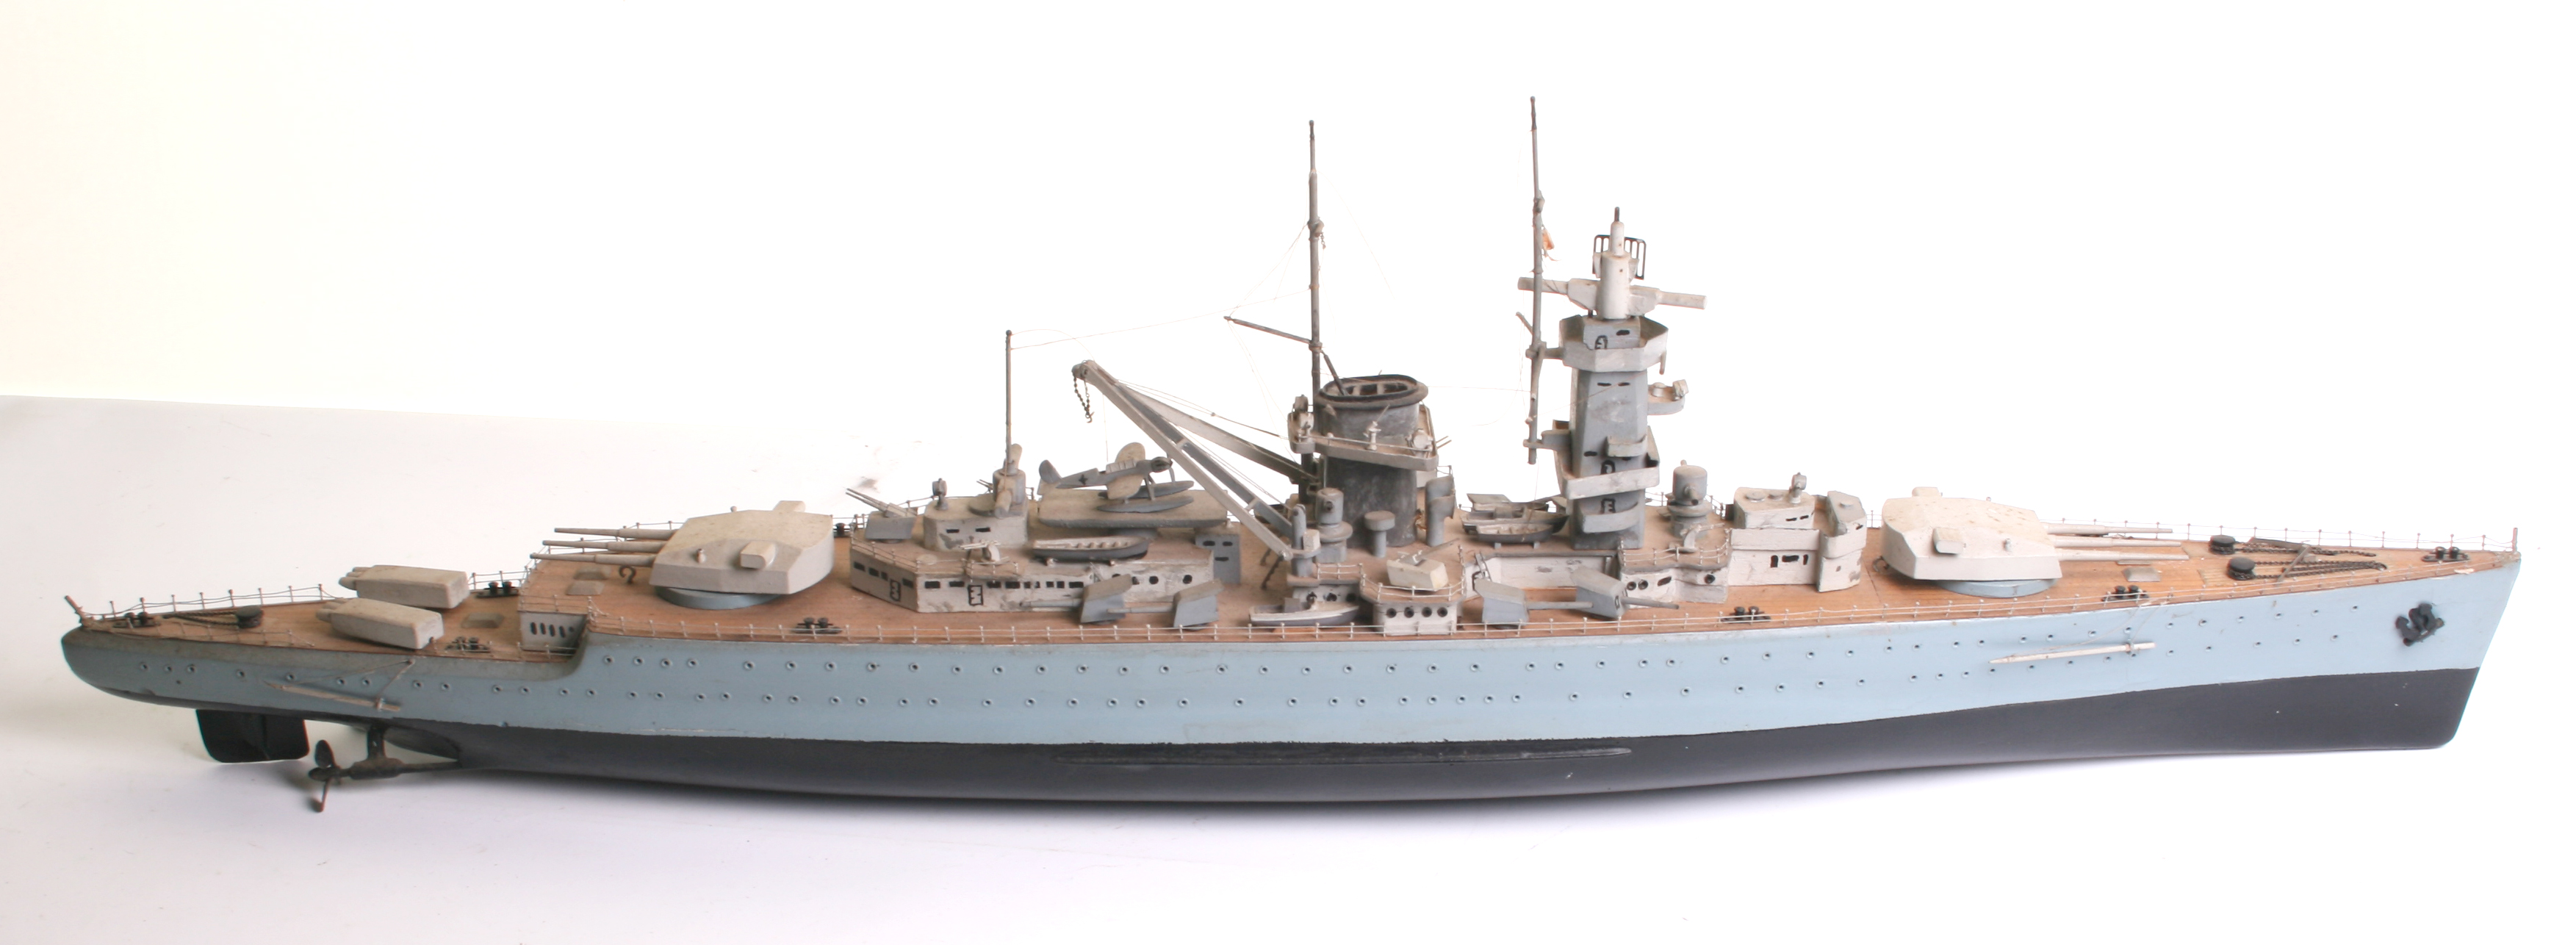 A wooden model of a German Deutschland-class heavy cruiser ‘Admiral Graf Spree’ Battleship,